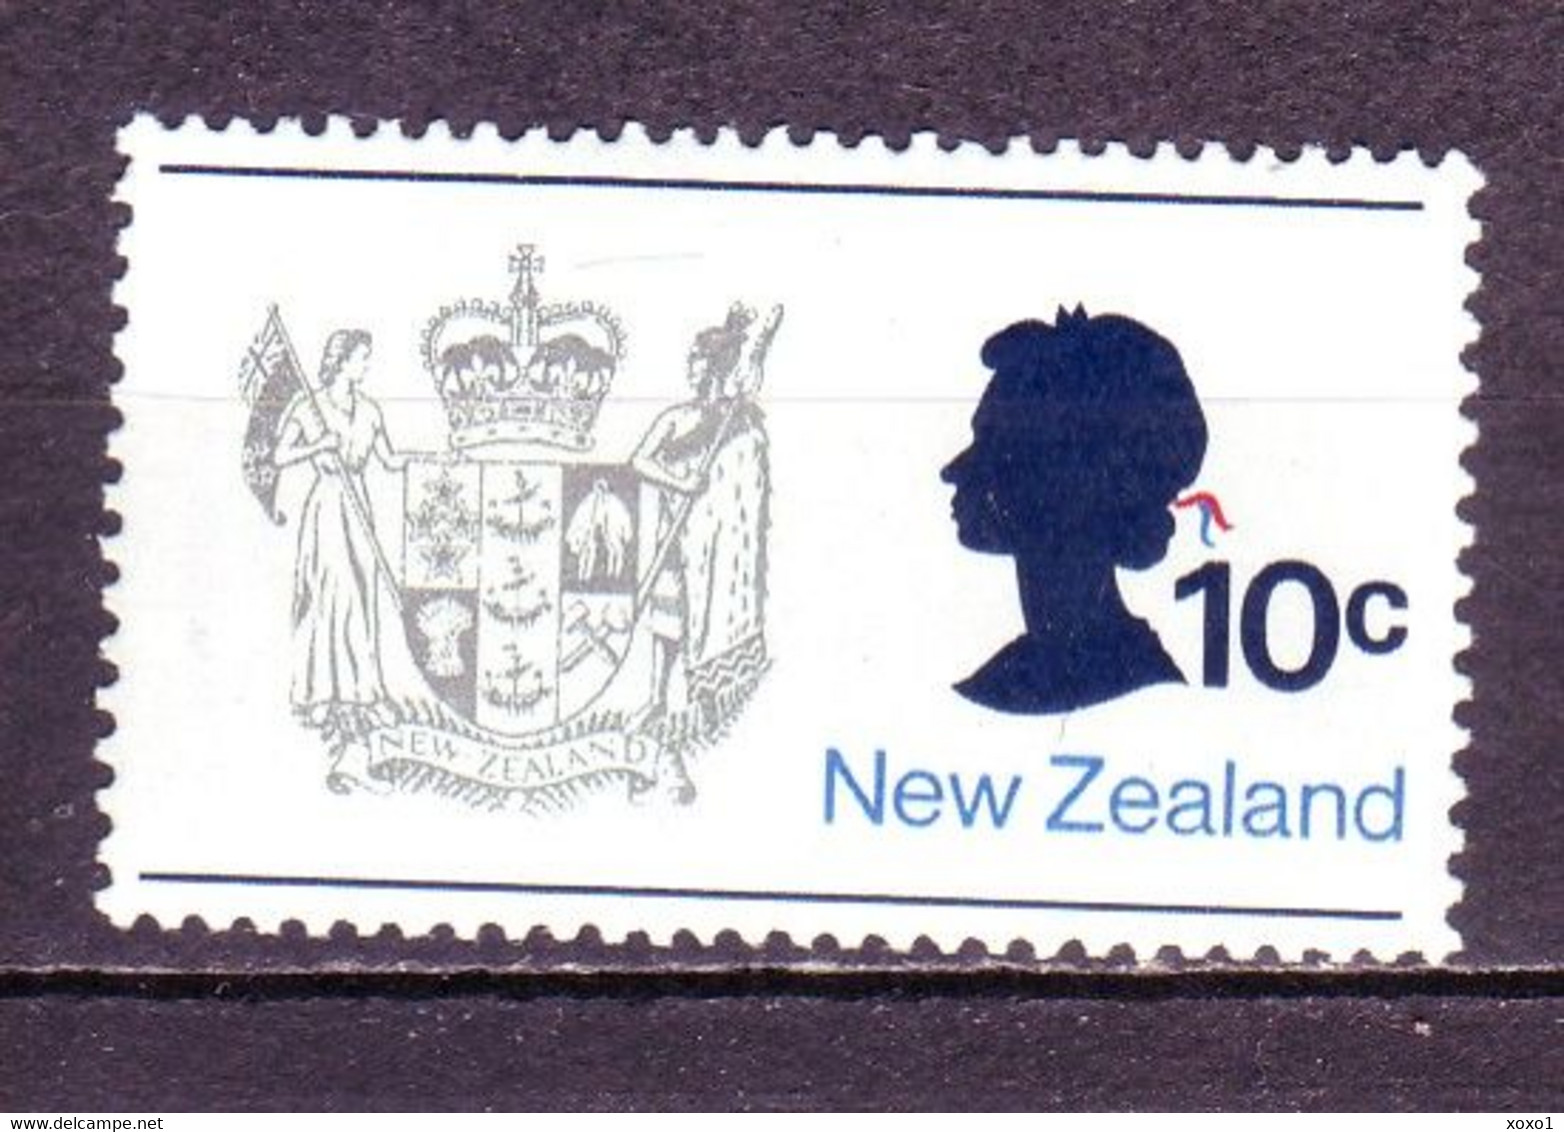 New Zealand 1970 MiNr. 518  Neuseeland  National Coat Of Arms, Queen Elizabeth II  1v MNH**  0,60 € - Nuevos